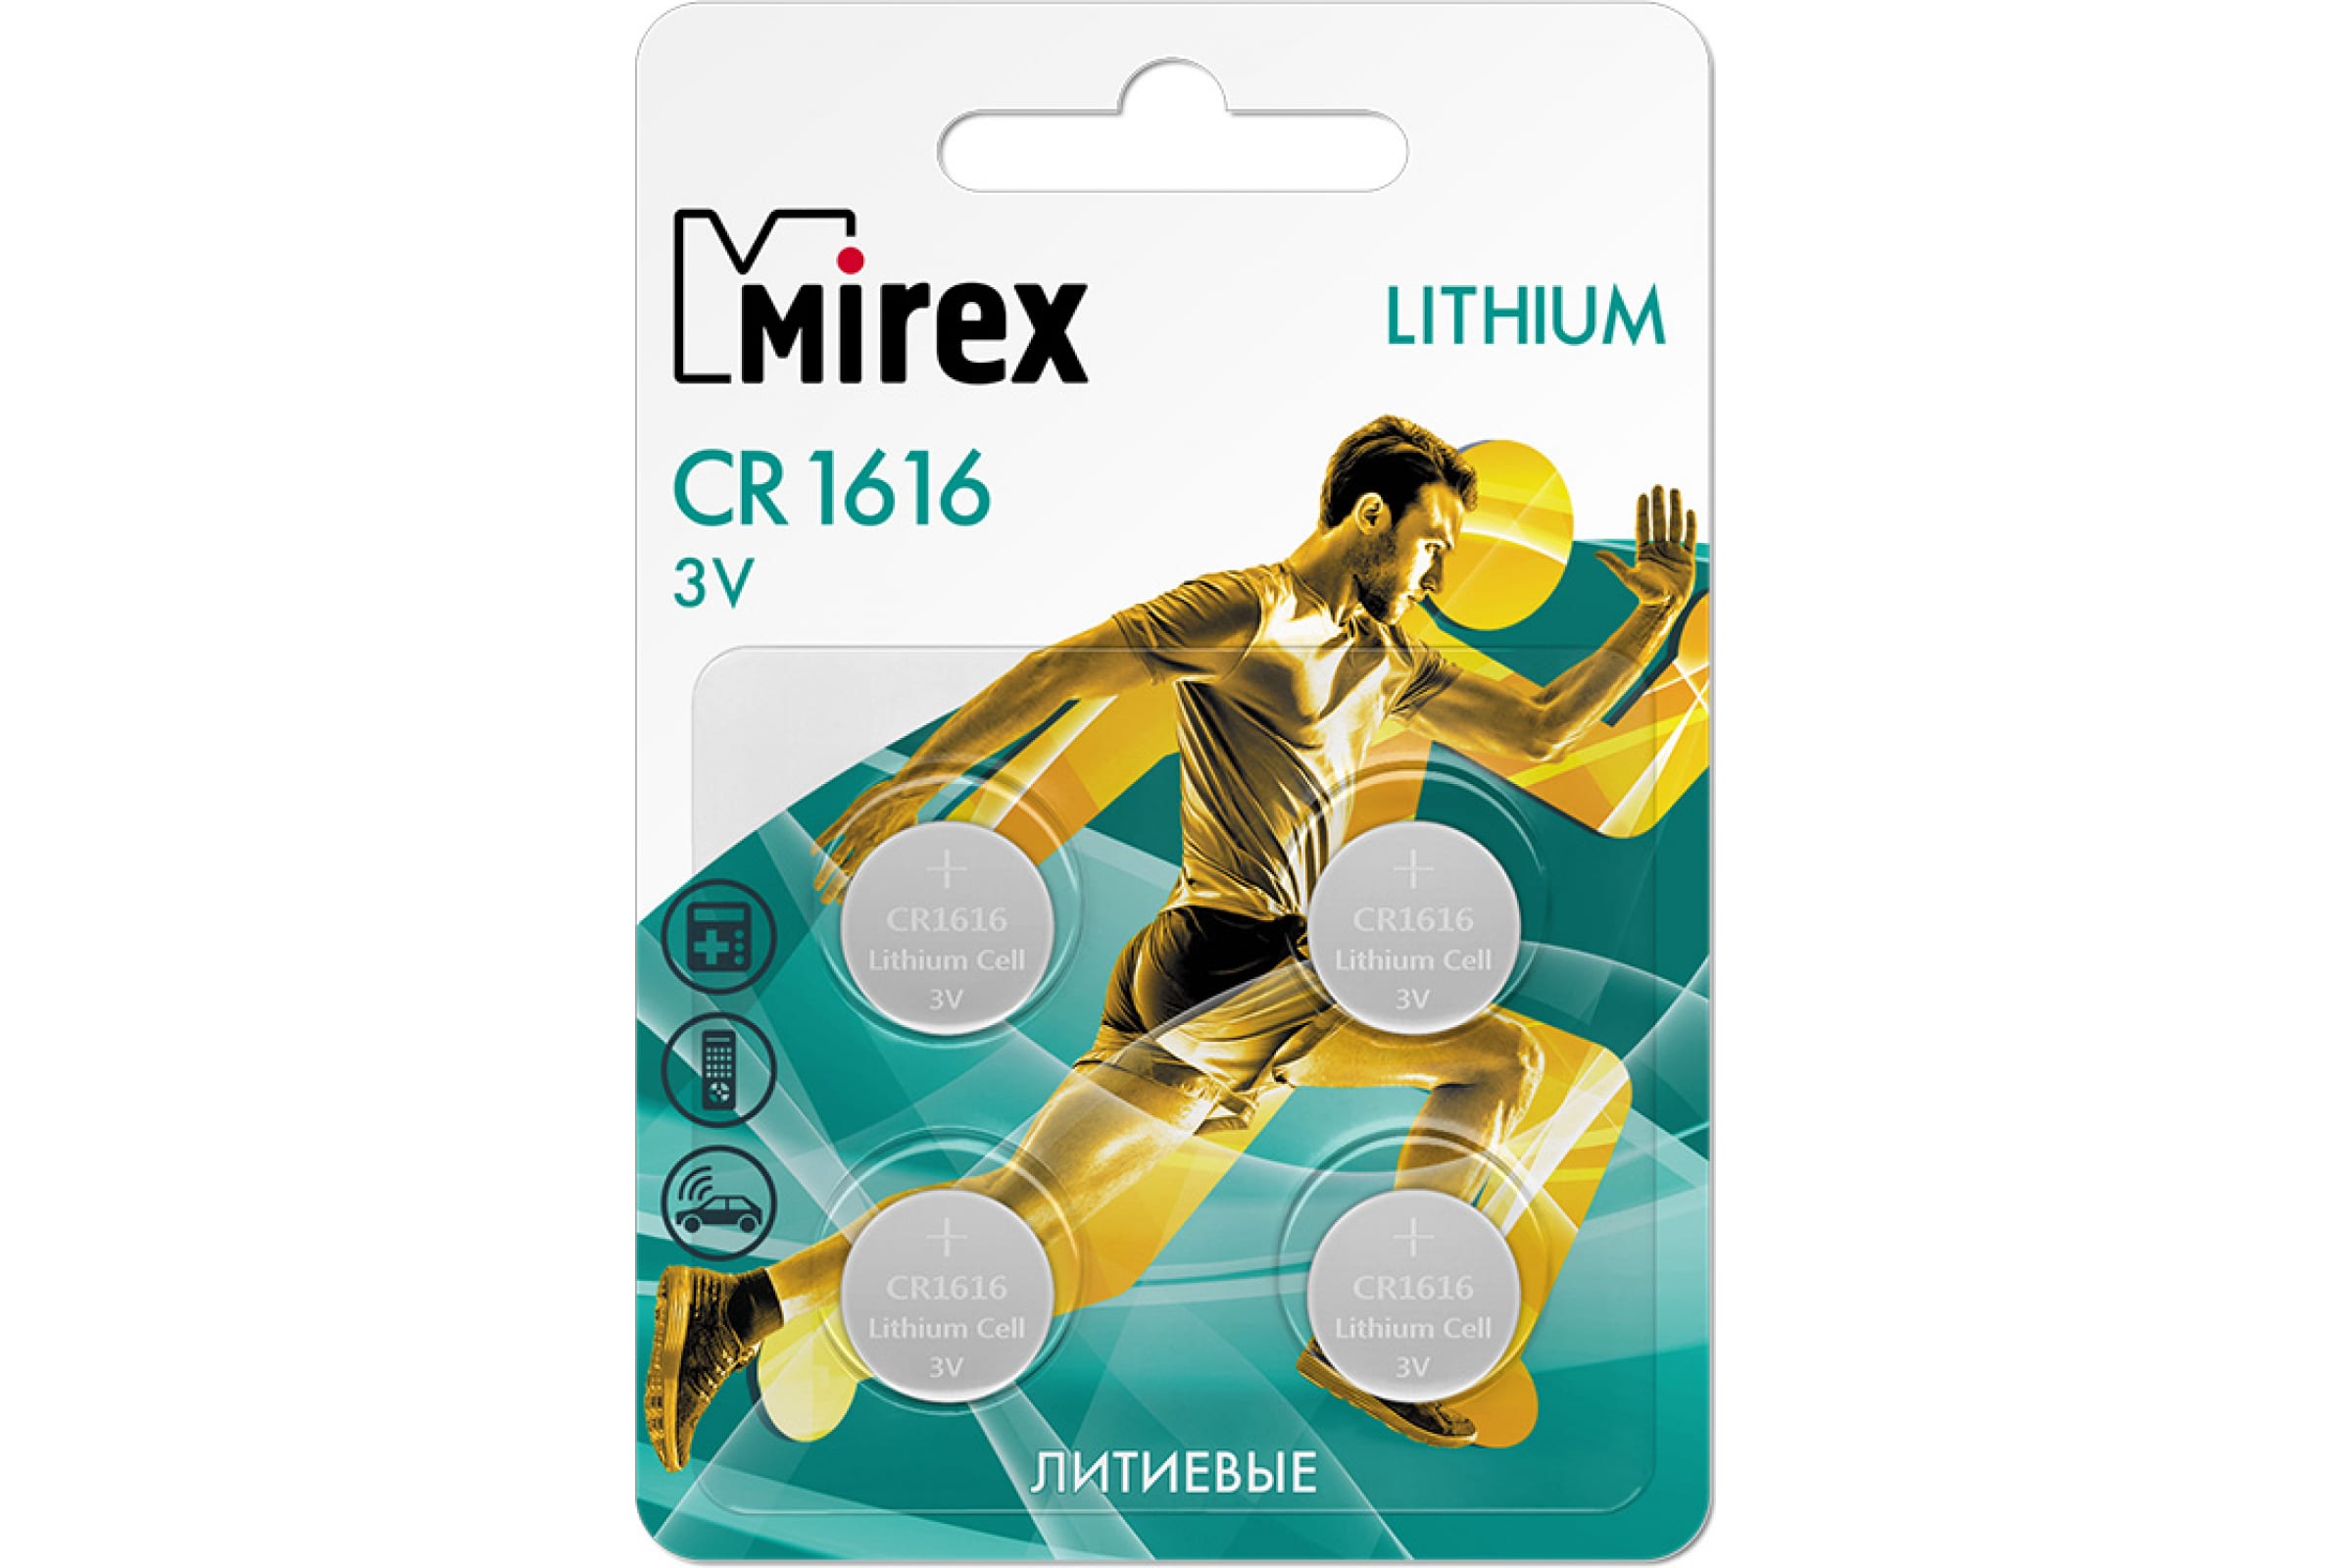 Mirex Батарея литиевая CR1616 3V 4 шт ecopack, 23702-CR1616-E4